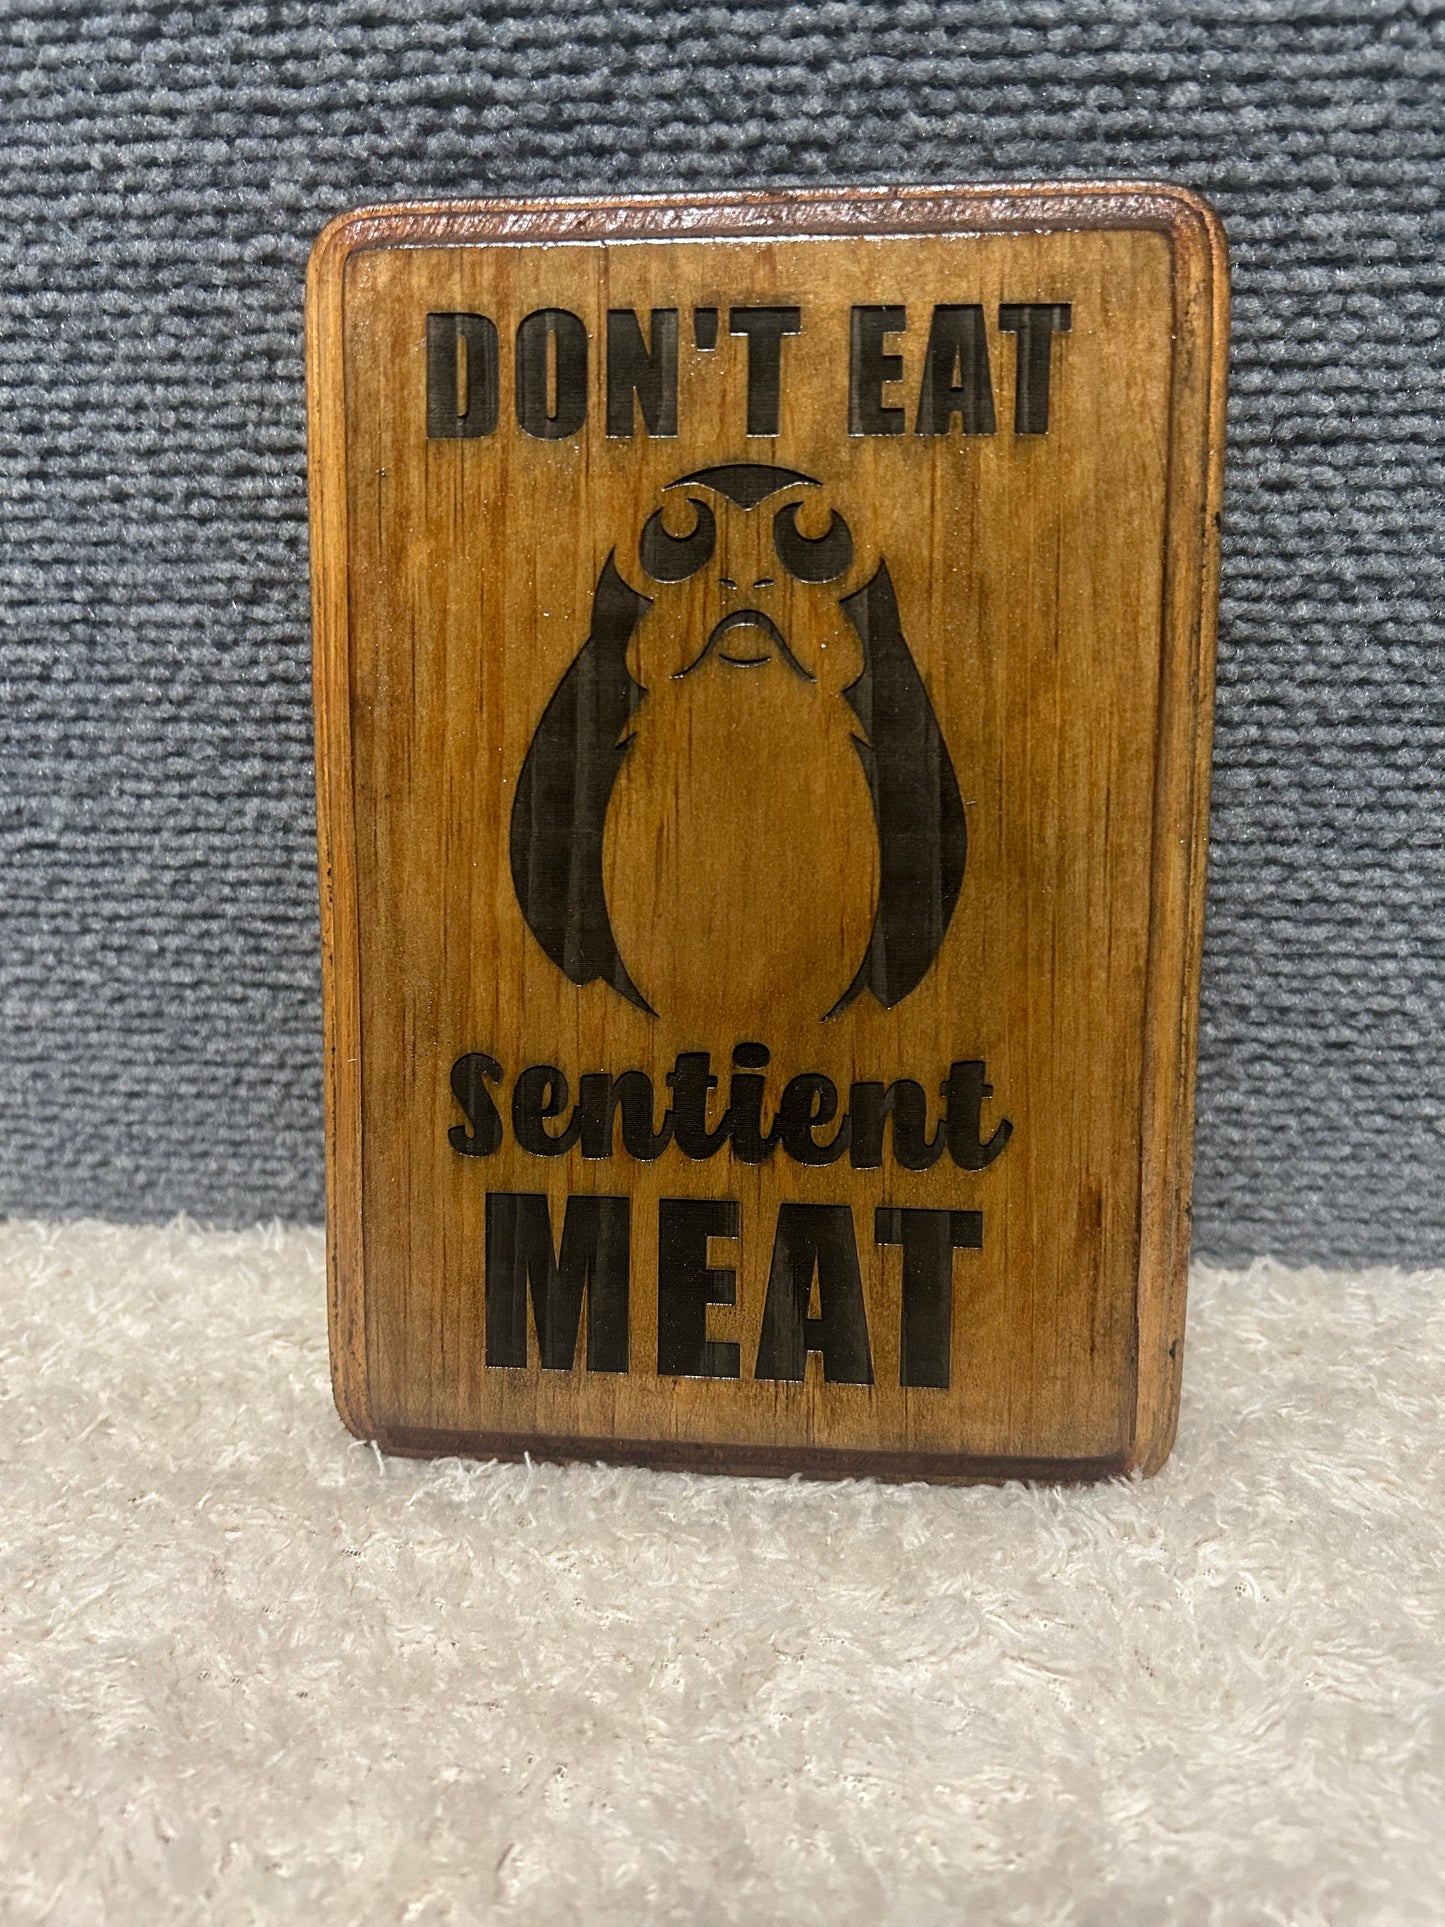 Don’t Eat Sentient Porg Meat